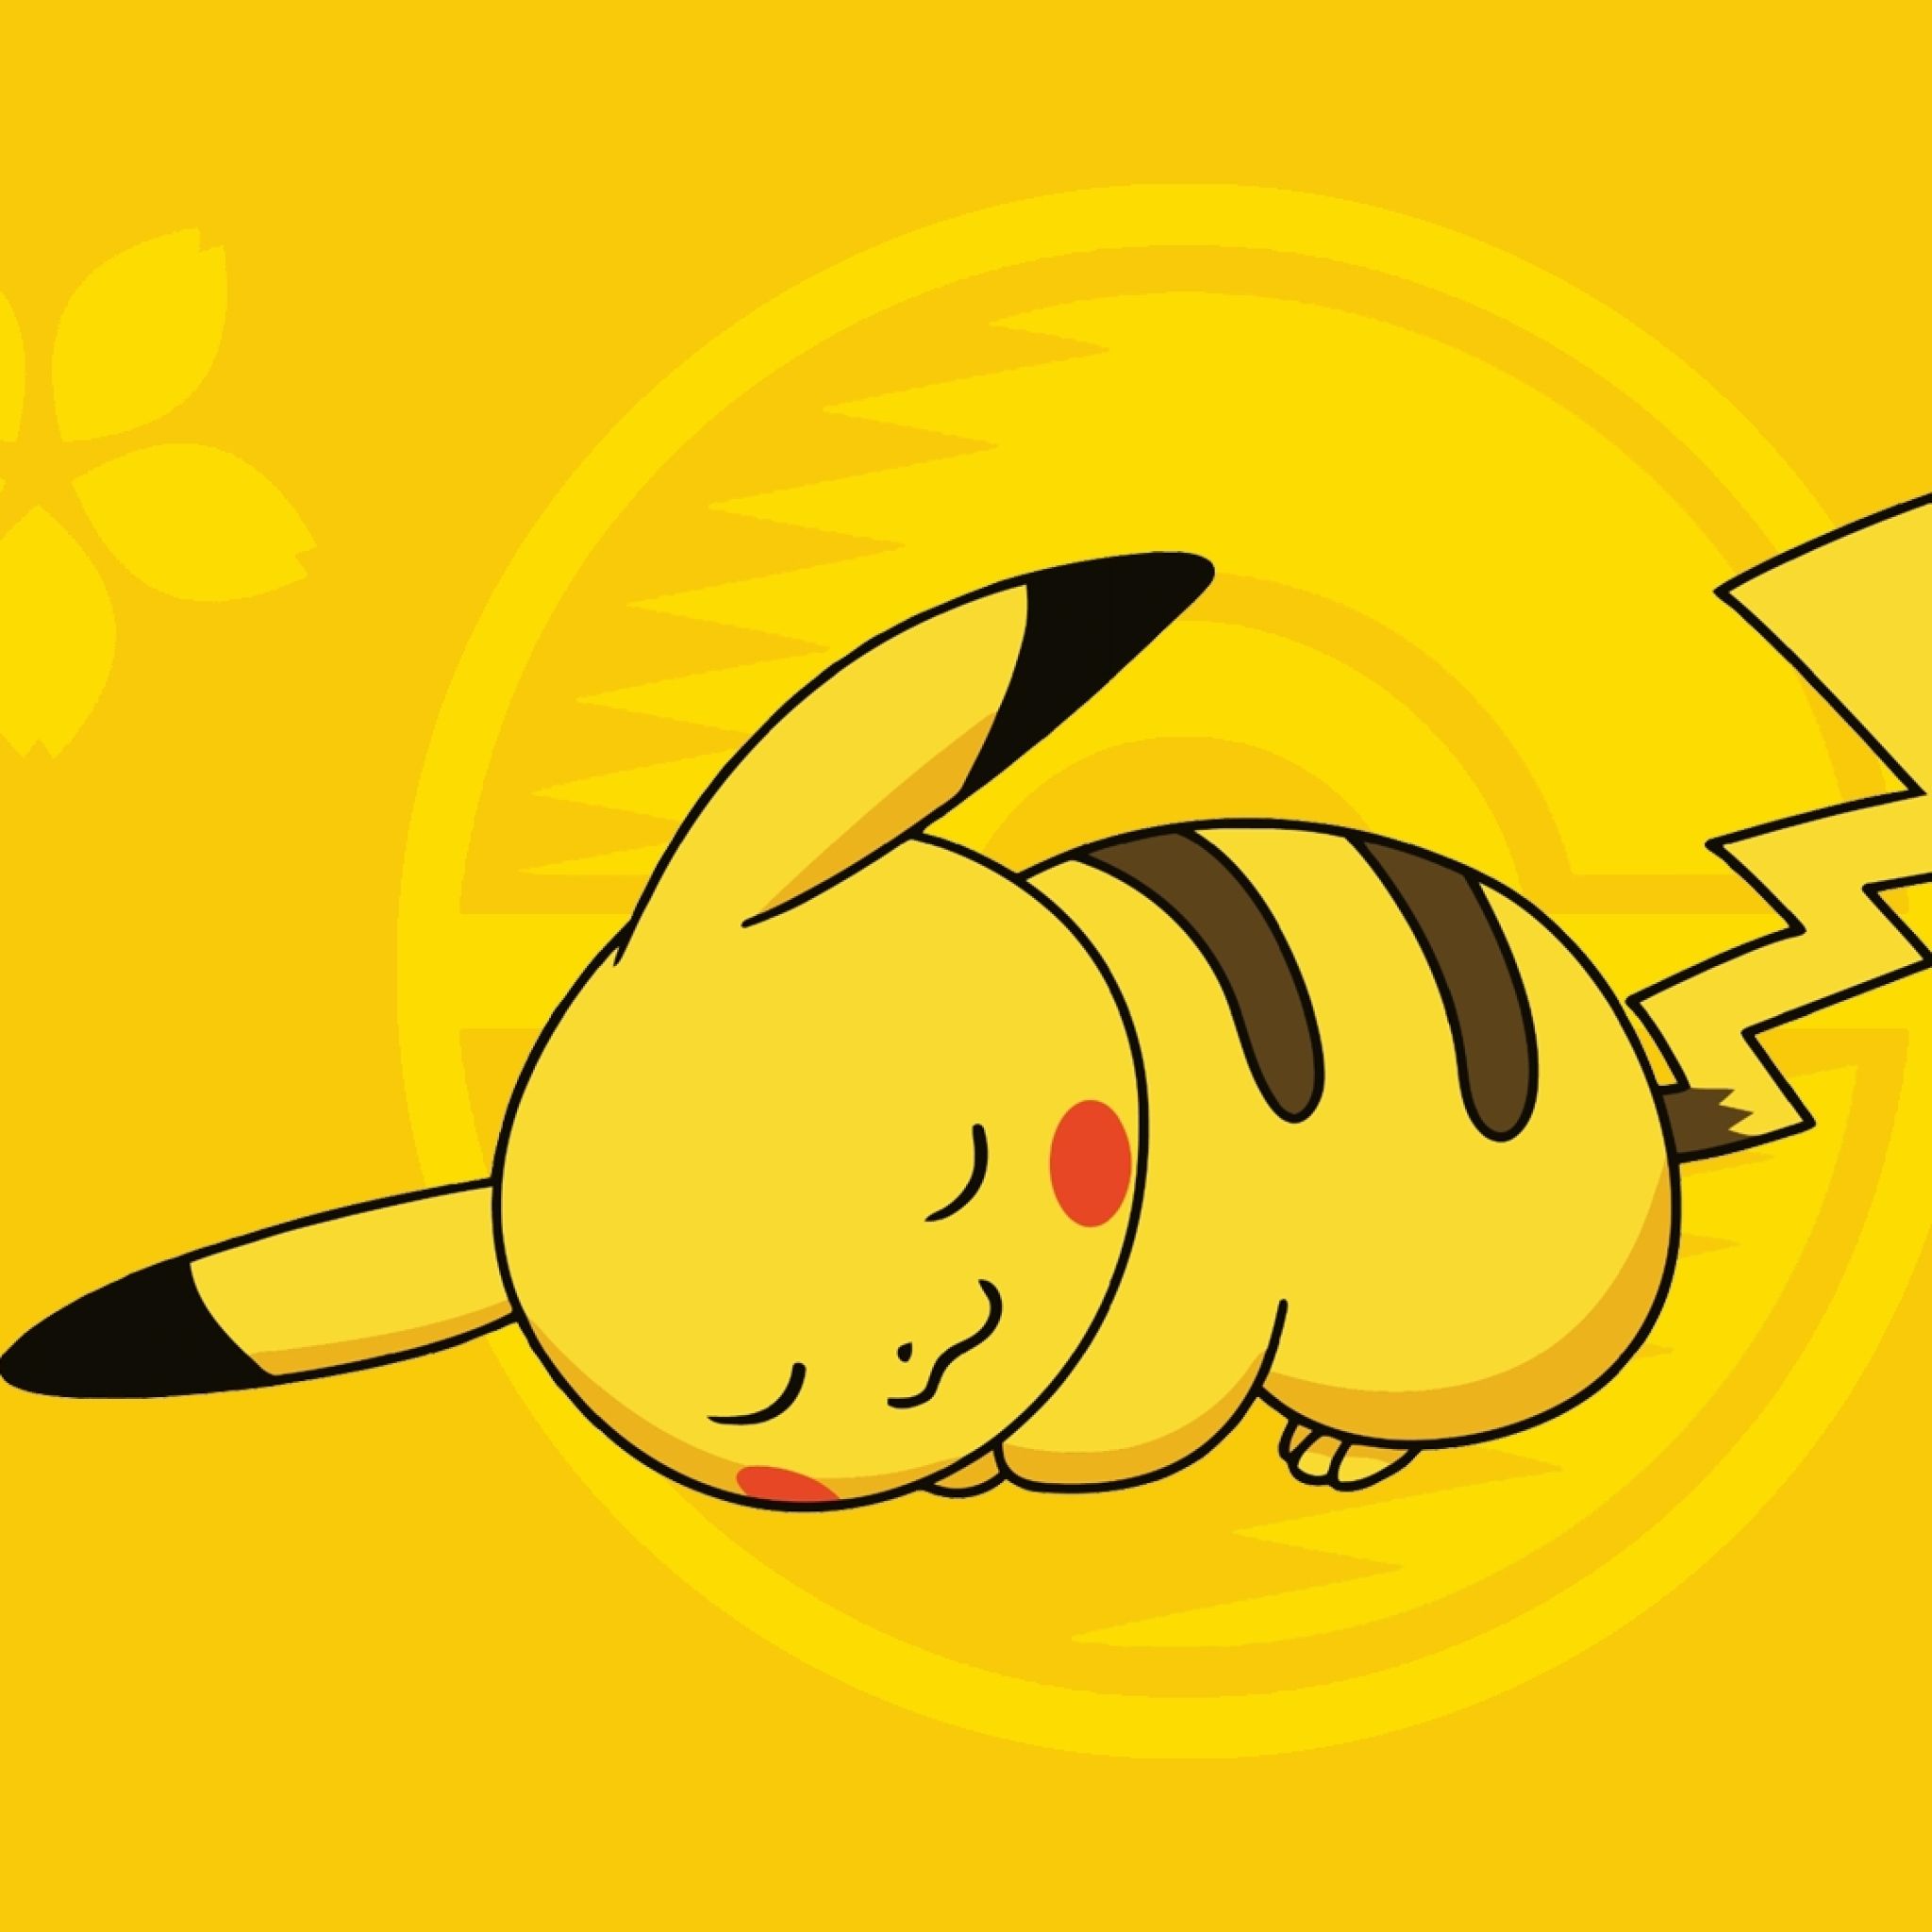 Sleepy Pikachu Tap To See More Cool Pokemon Mobile Pikachu Wallpaper & Background Download